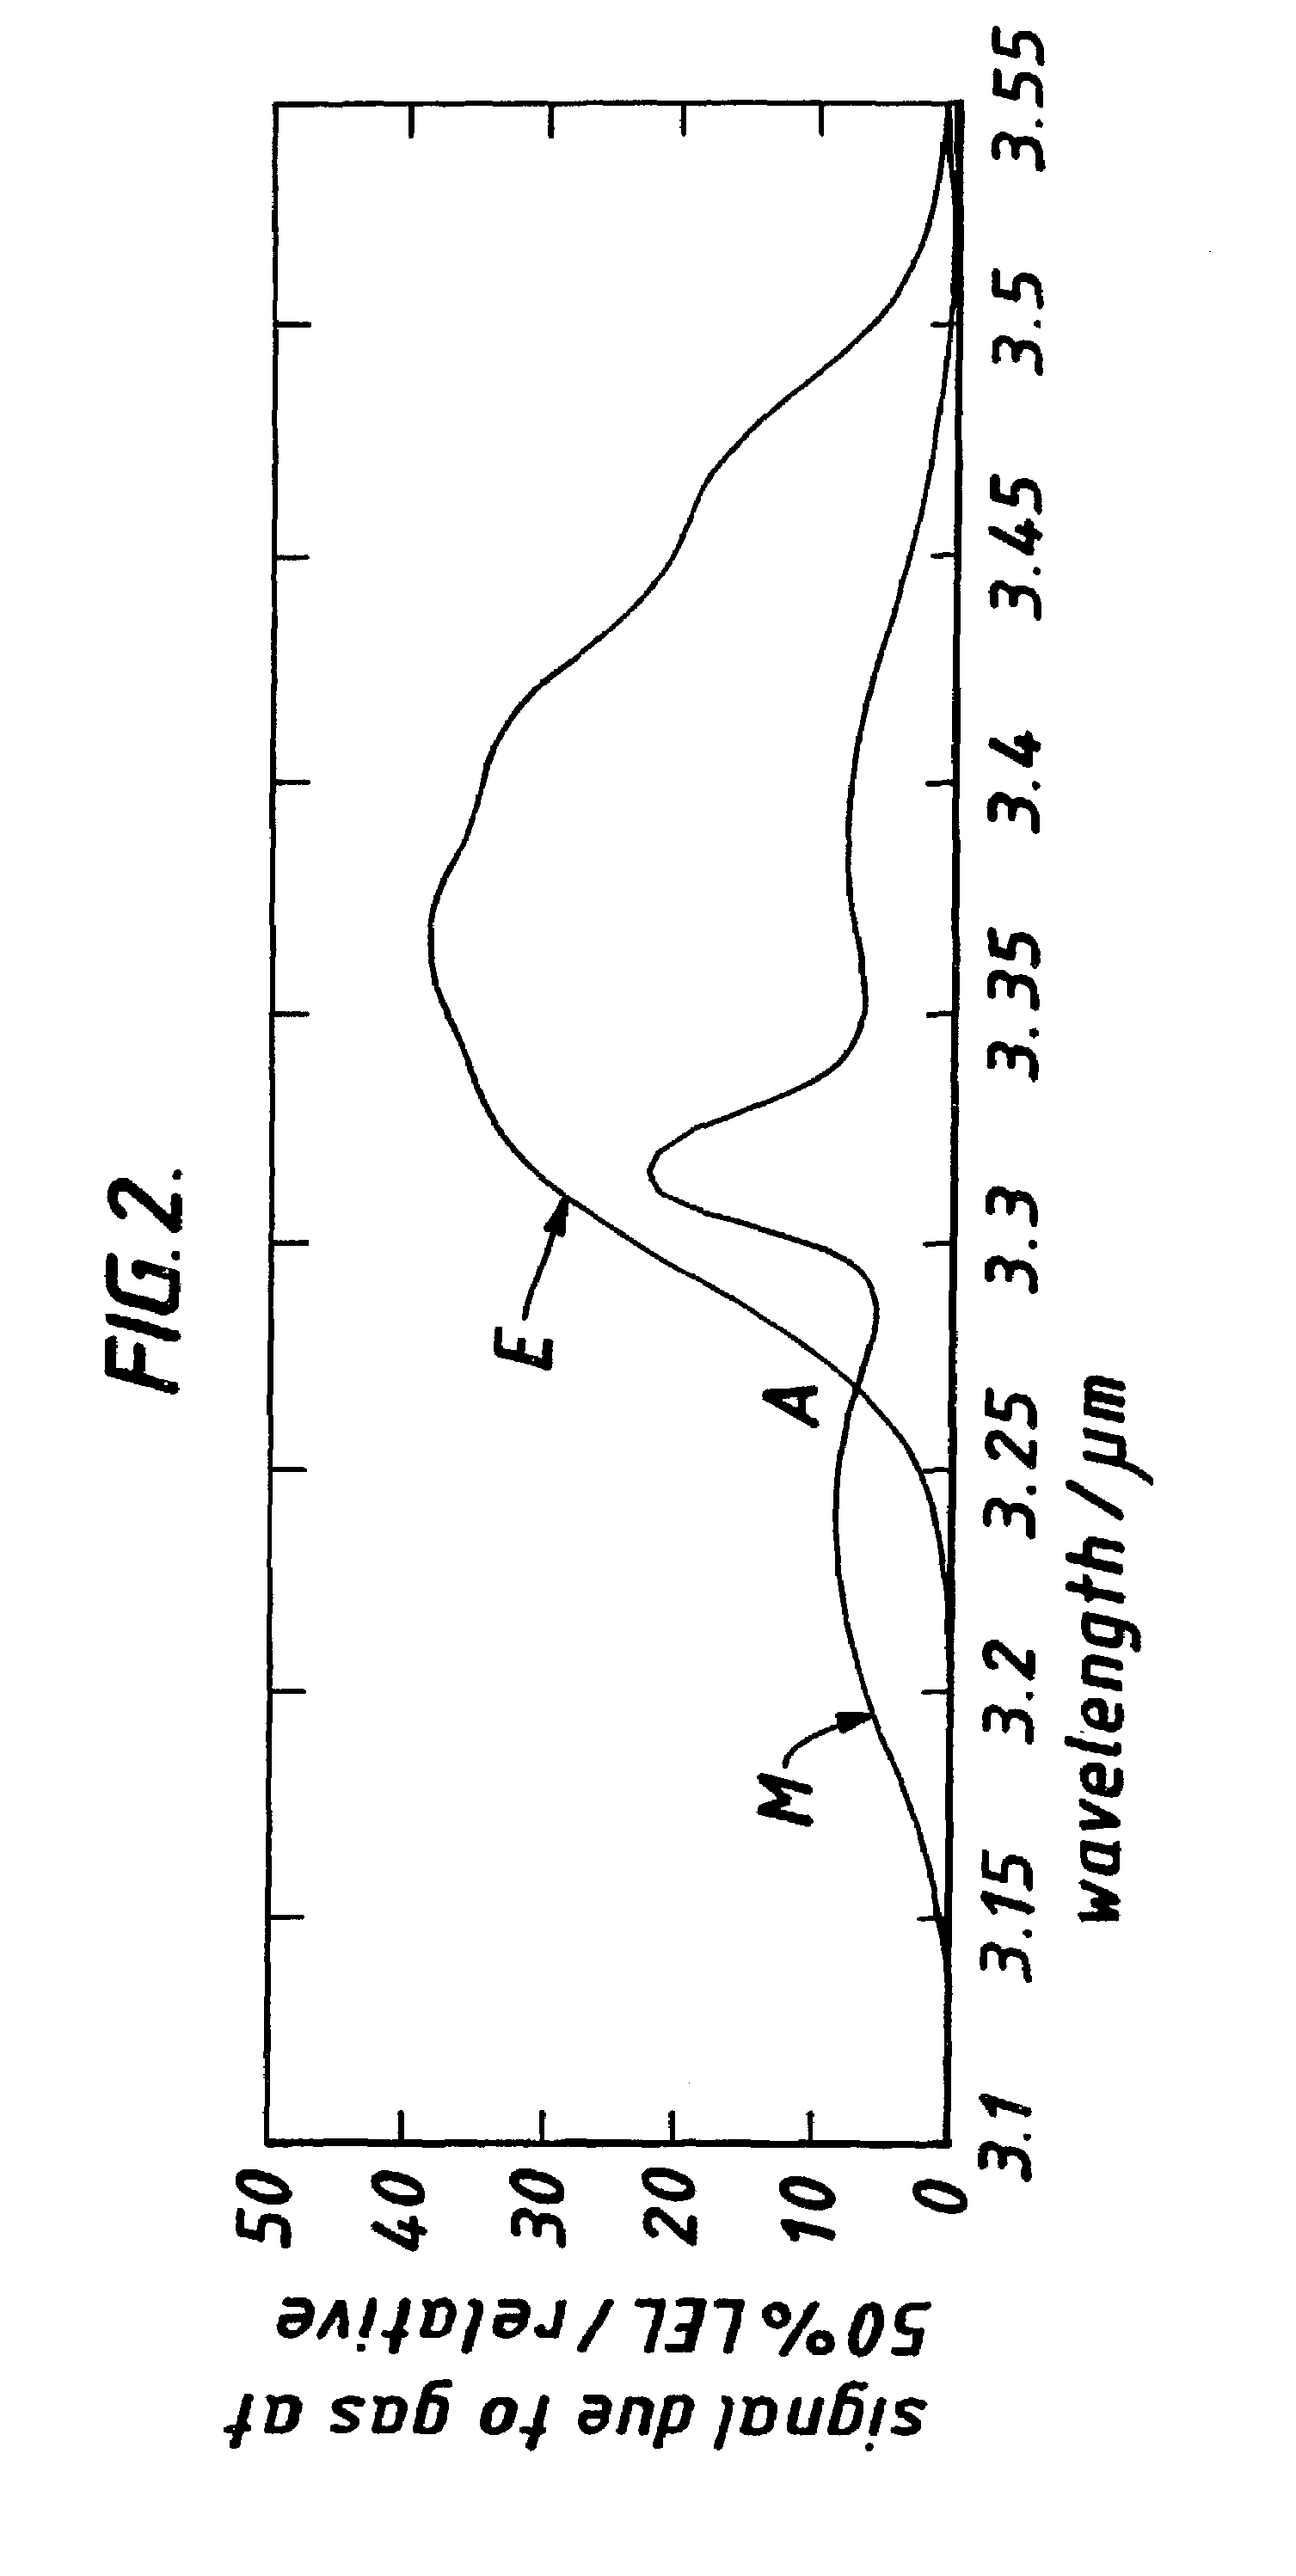 Non-dispersive ir measurement of gases using an optical filter